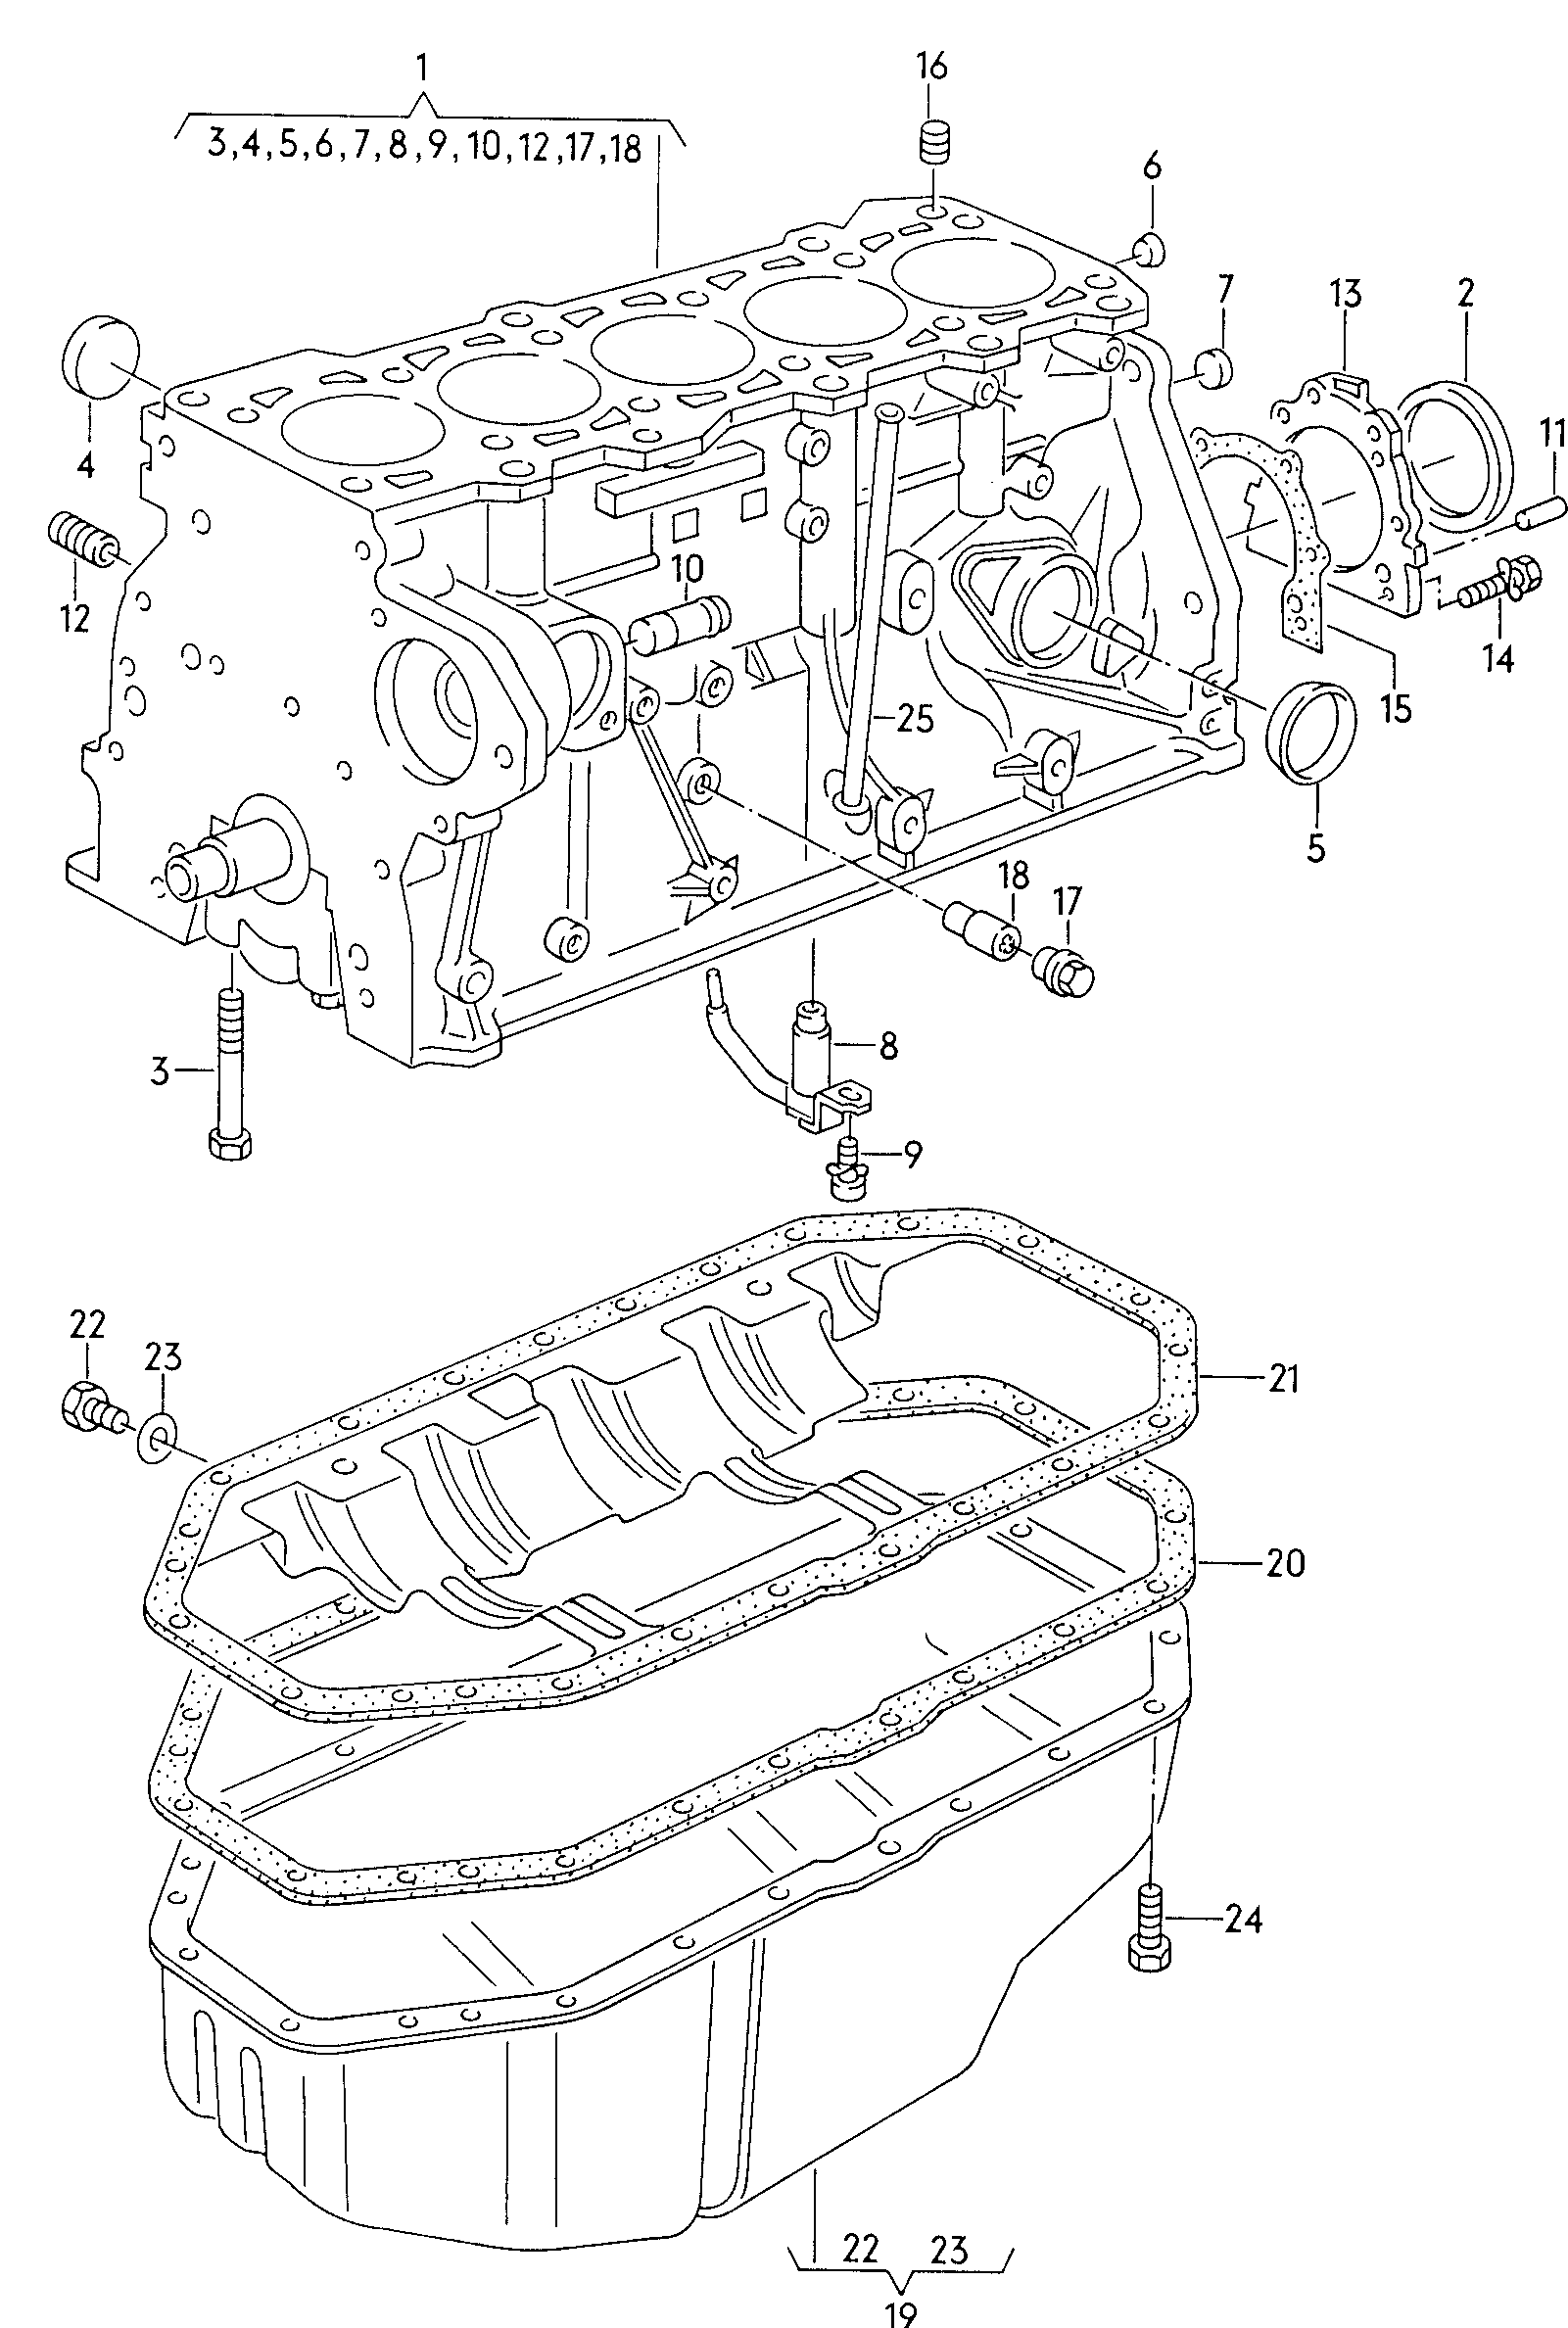 cylinder block with pistonsoil sump 2.0-2.5 Ltr. - Audi 100/Avant - a100